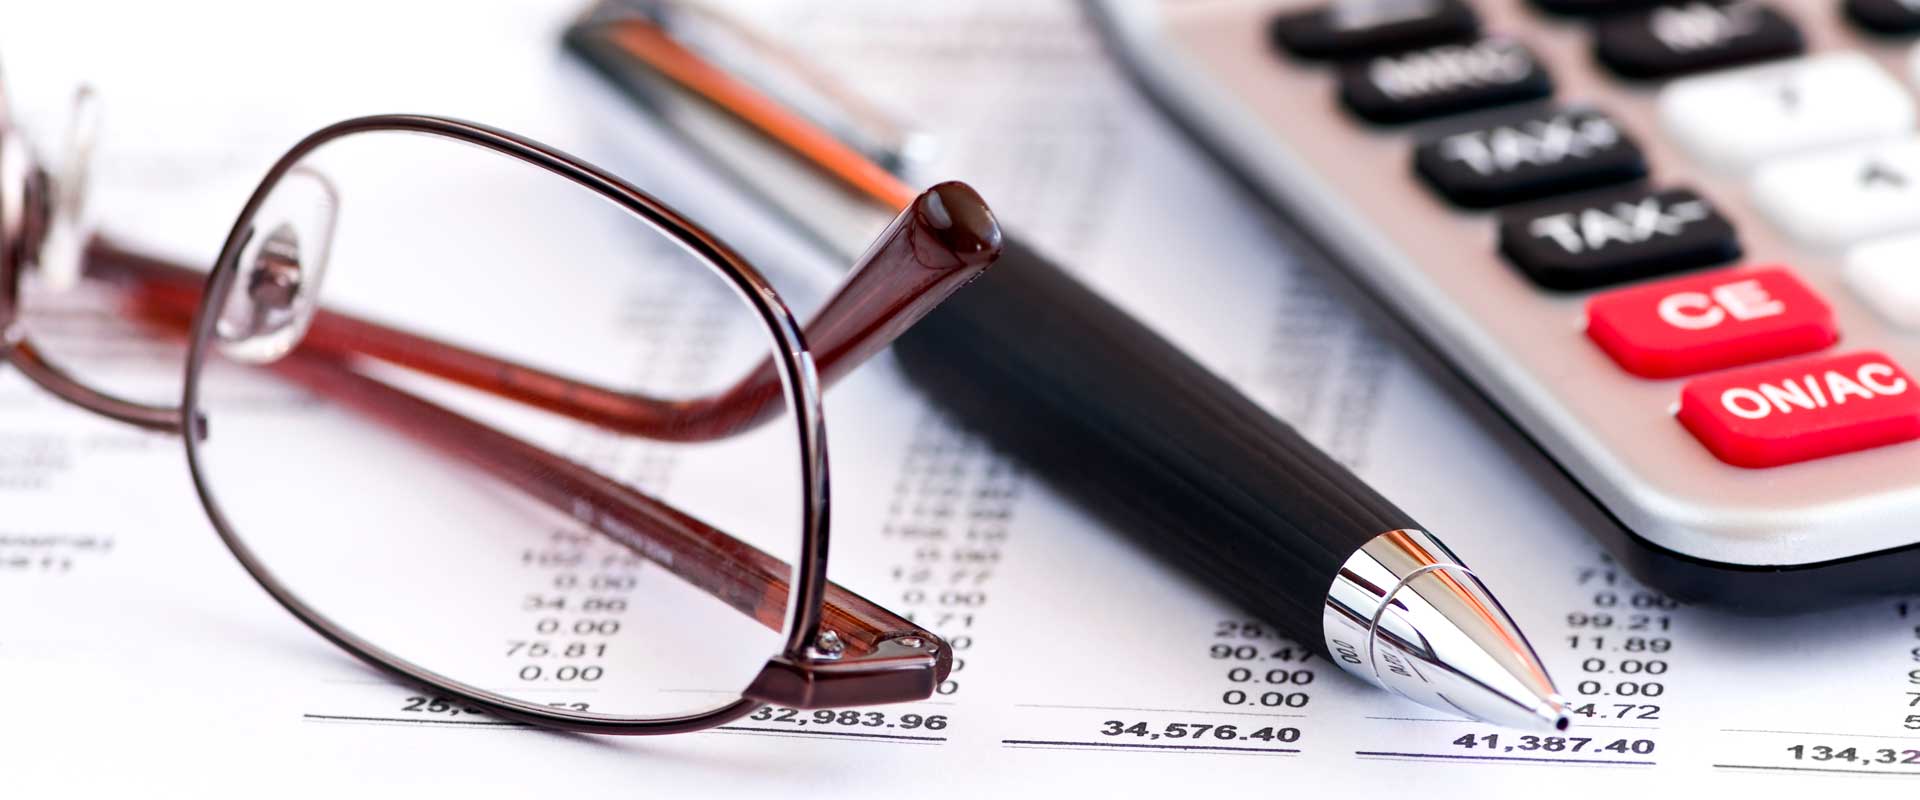 financial auditors calculator, pen and glasses